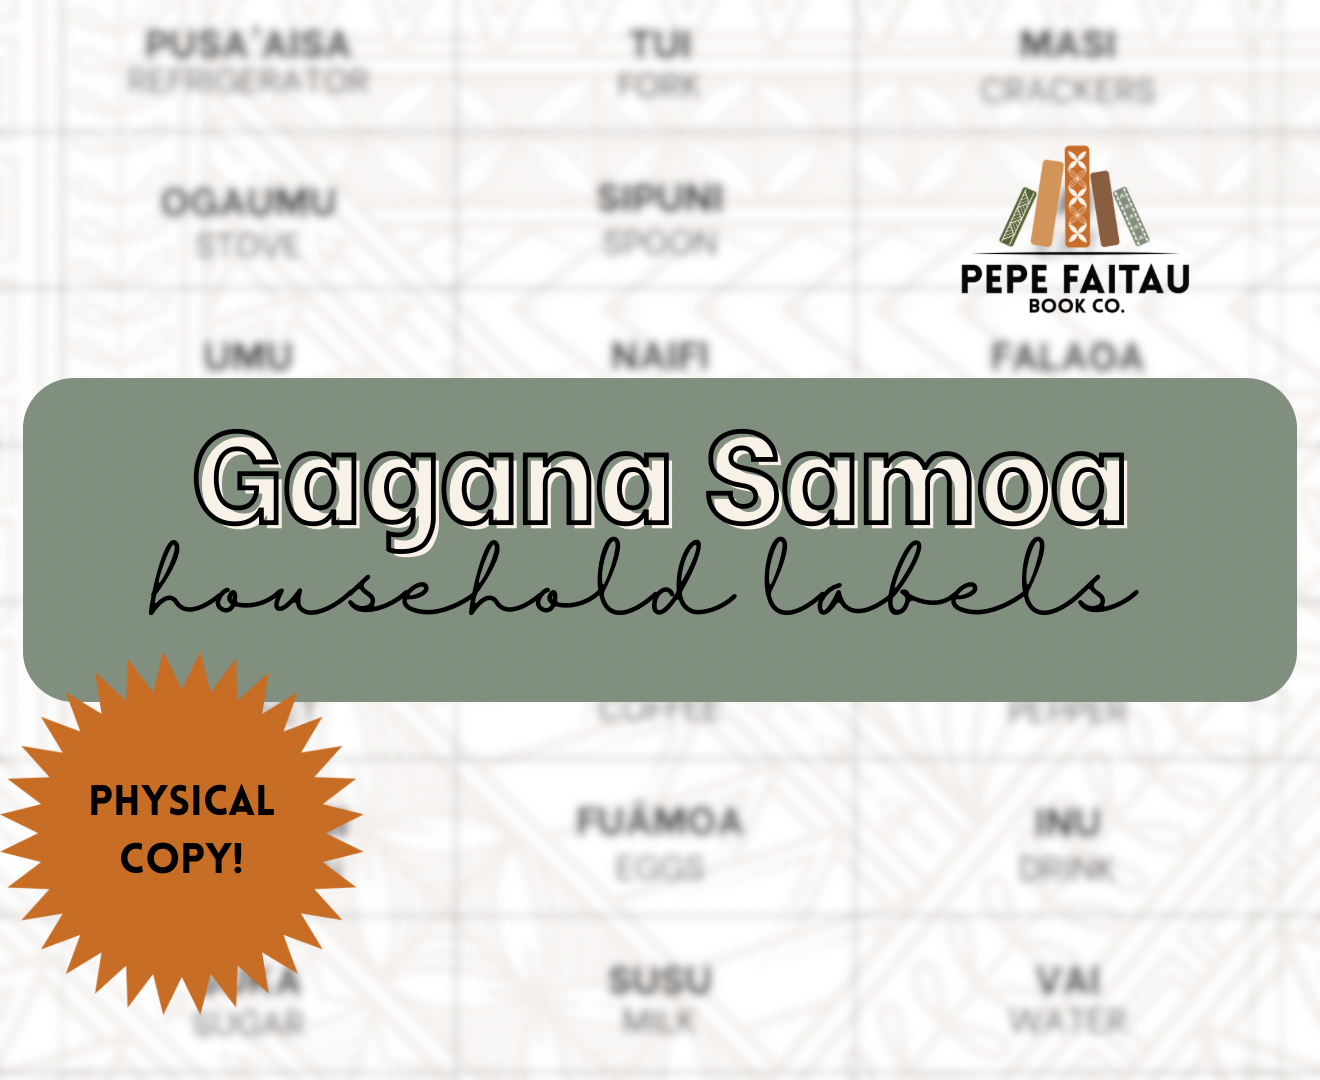 Physical Copy - Gagana Samoa Household Labels